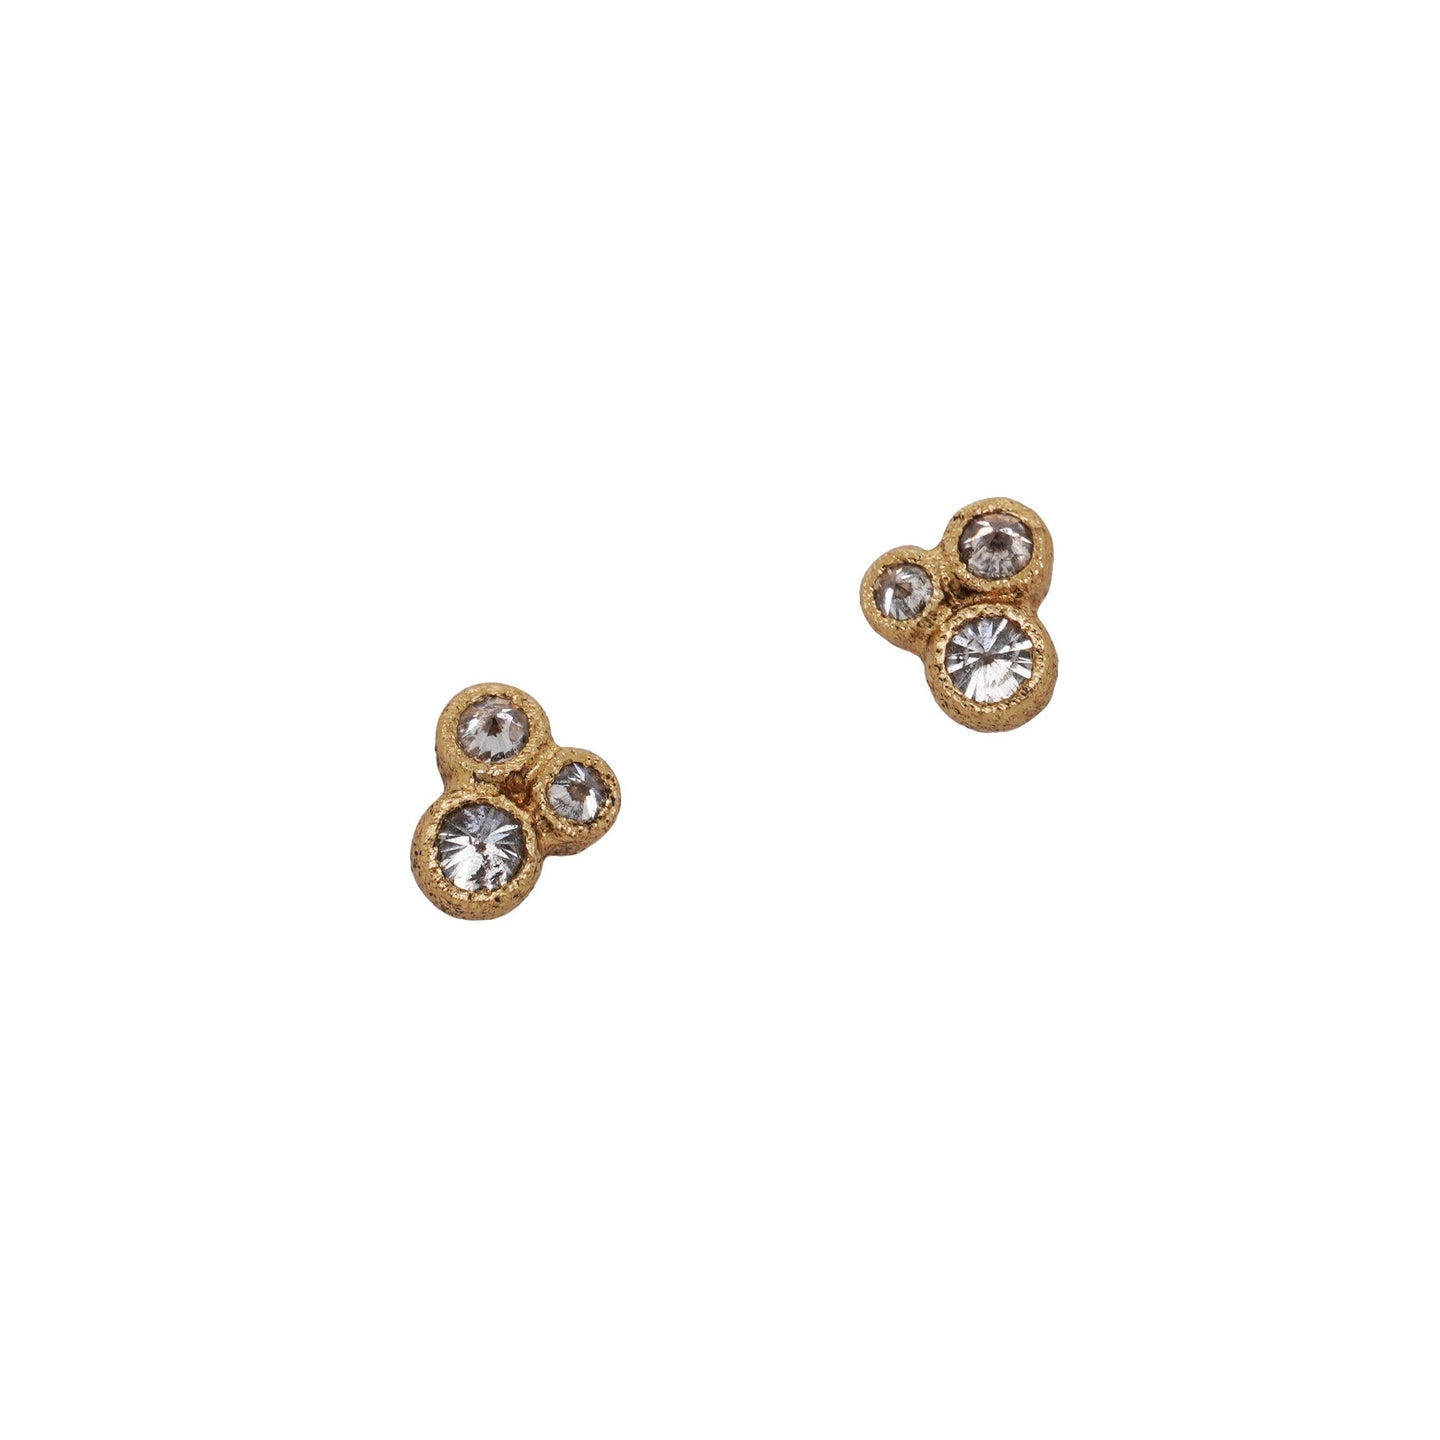 Inverted Triple Diamond Earrings